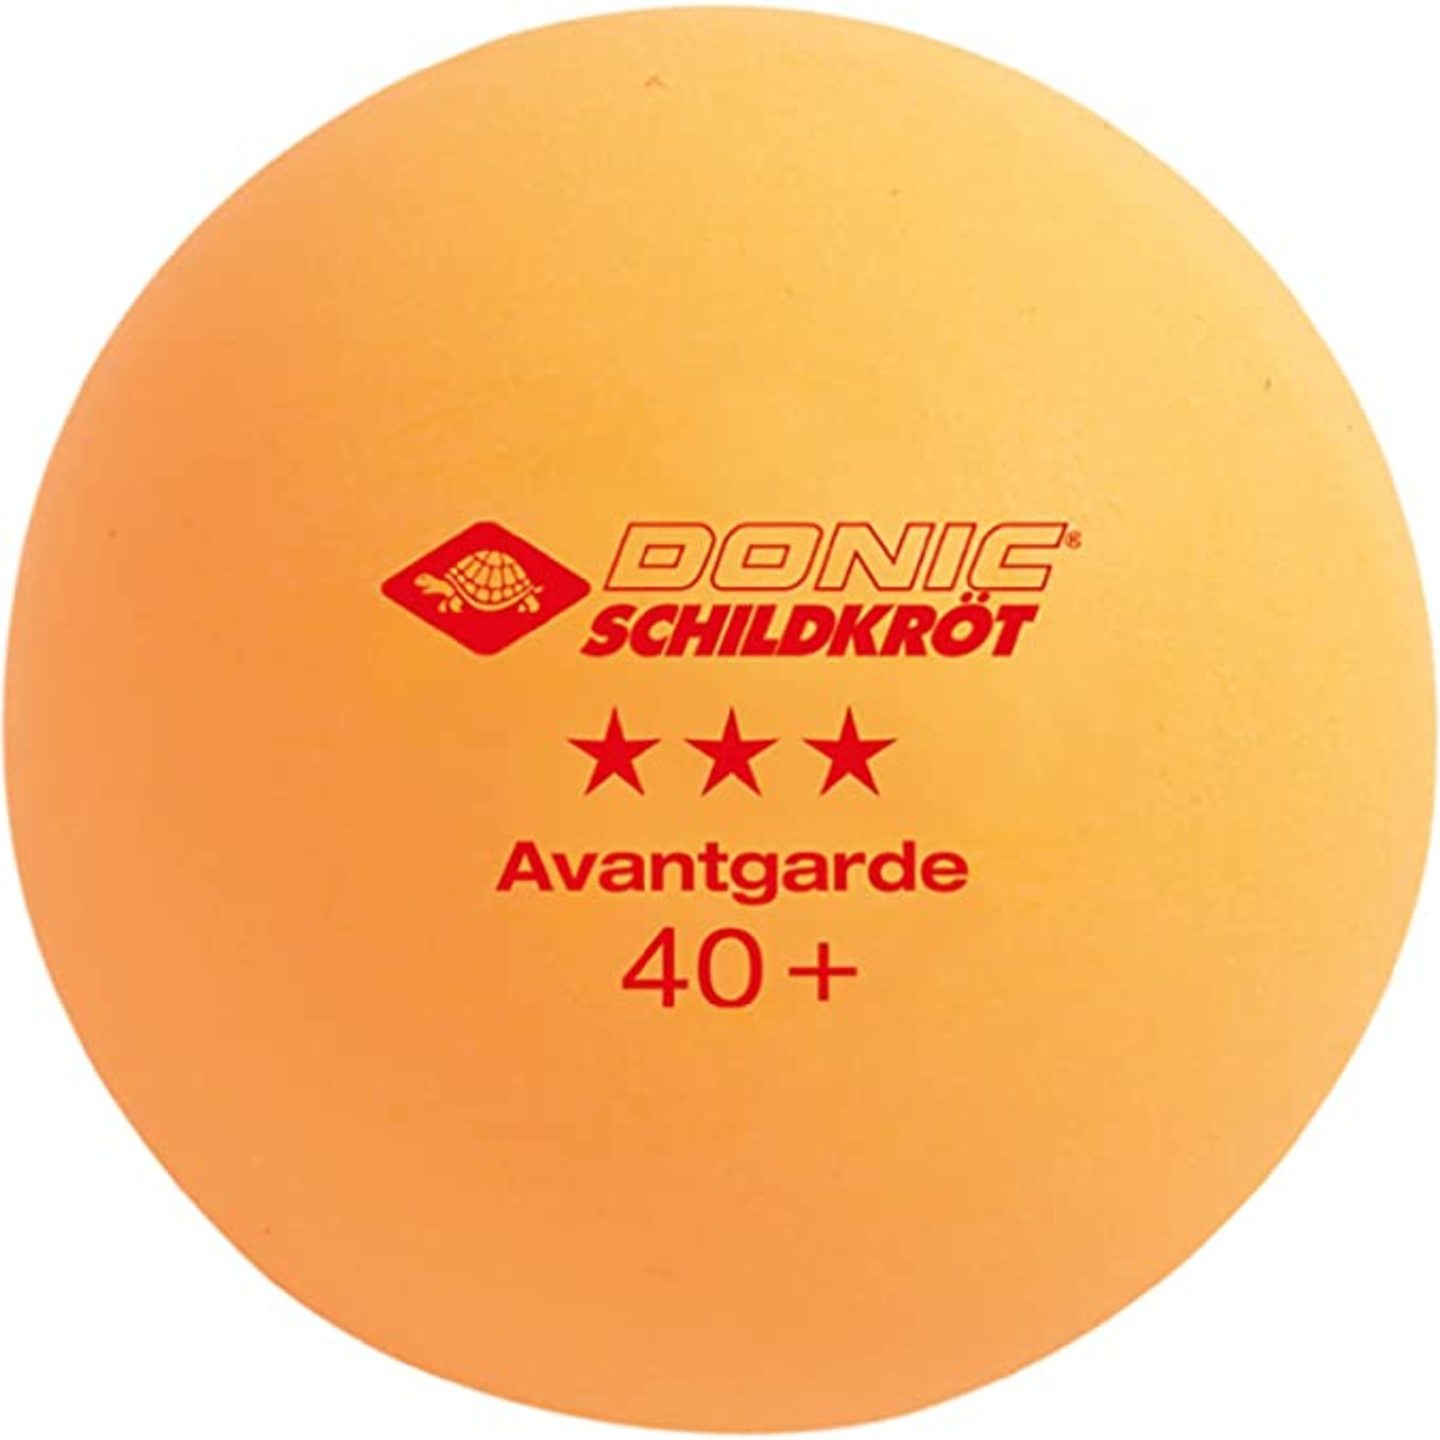 DONIC AVANTGRADE 3 STAR PLASTIC TABLE TENNIS BALL